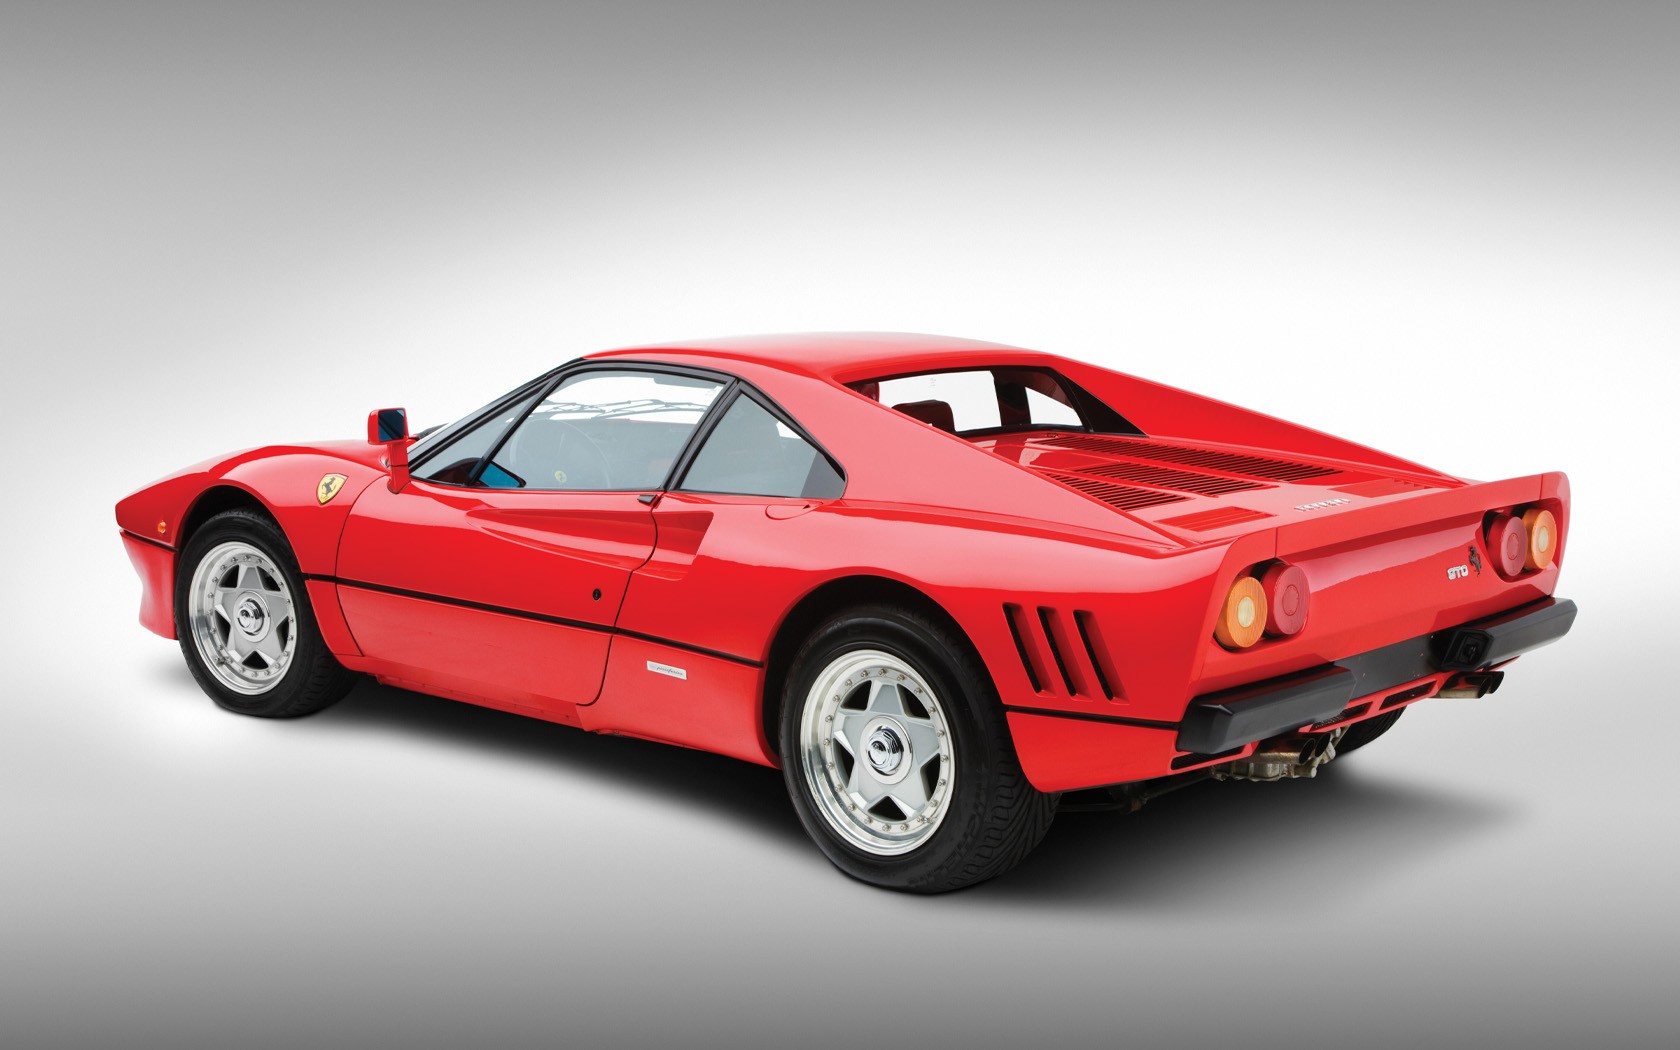 A Short Story of How the Legendary Ferrari 288 GTO Was Developed